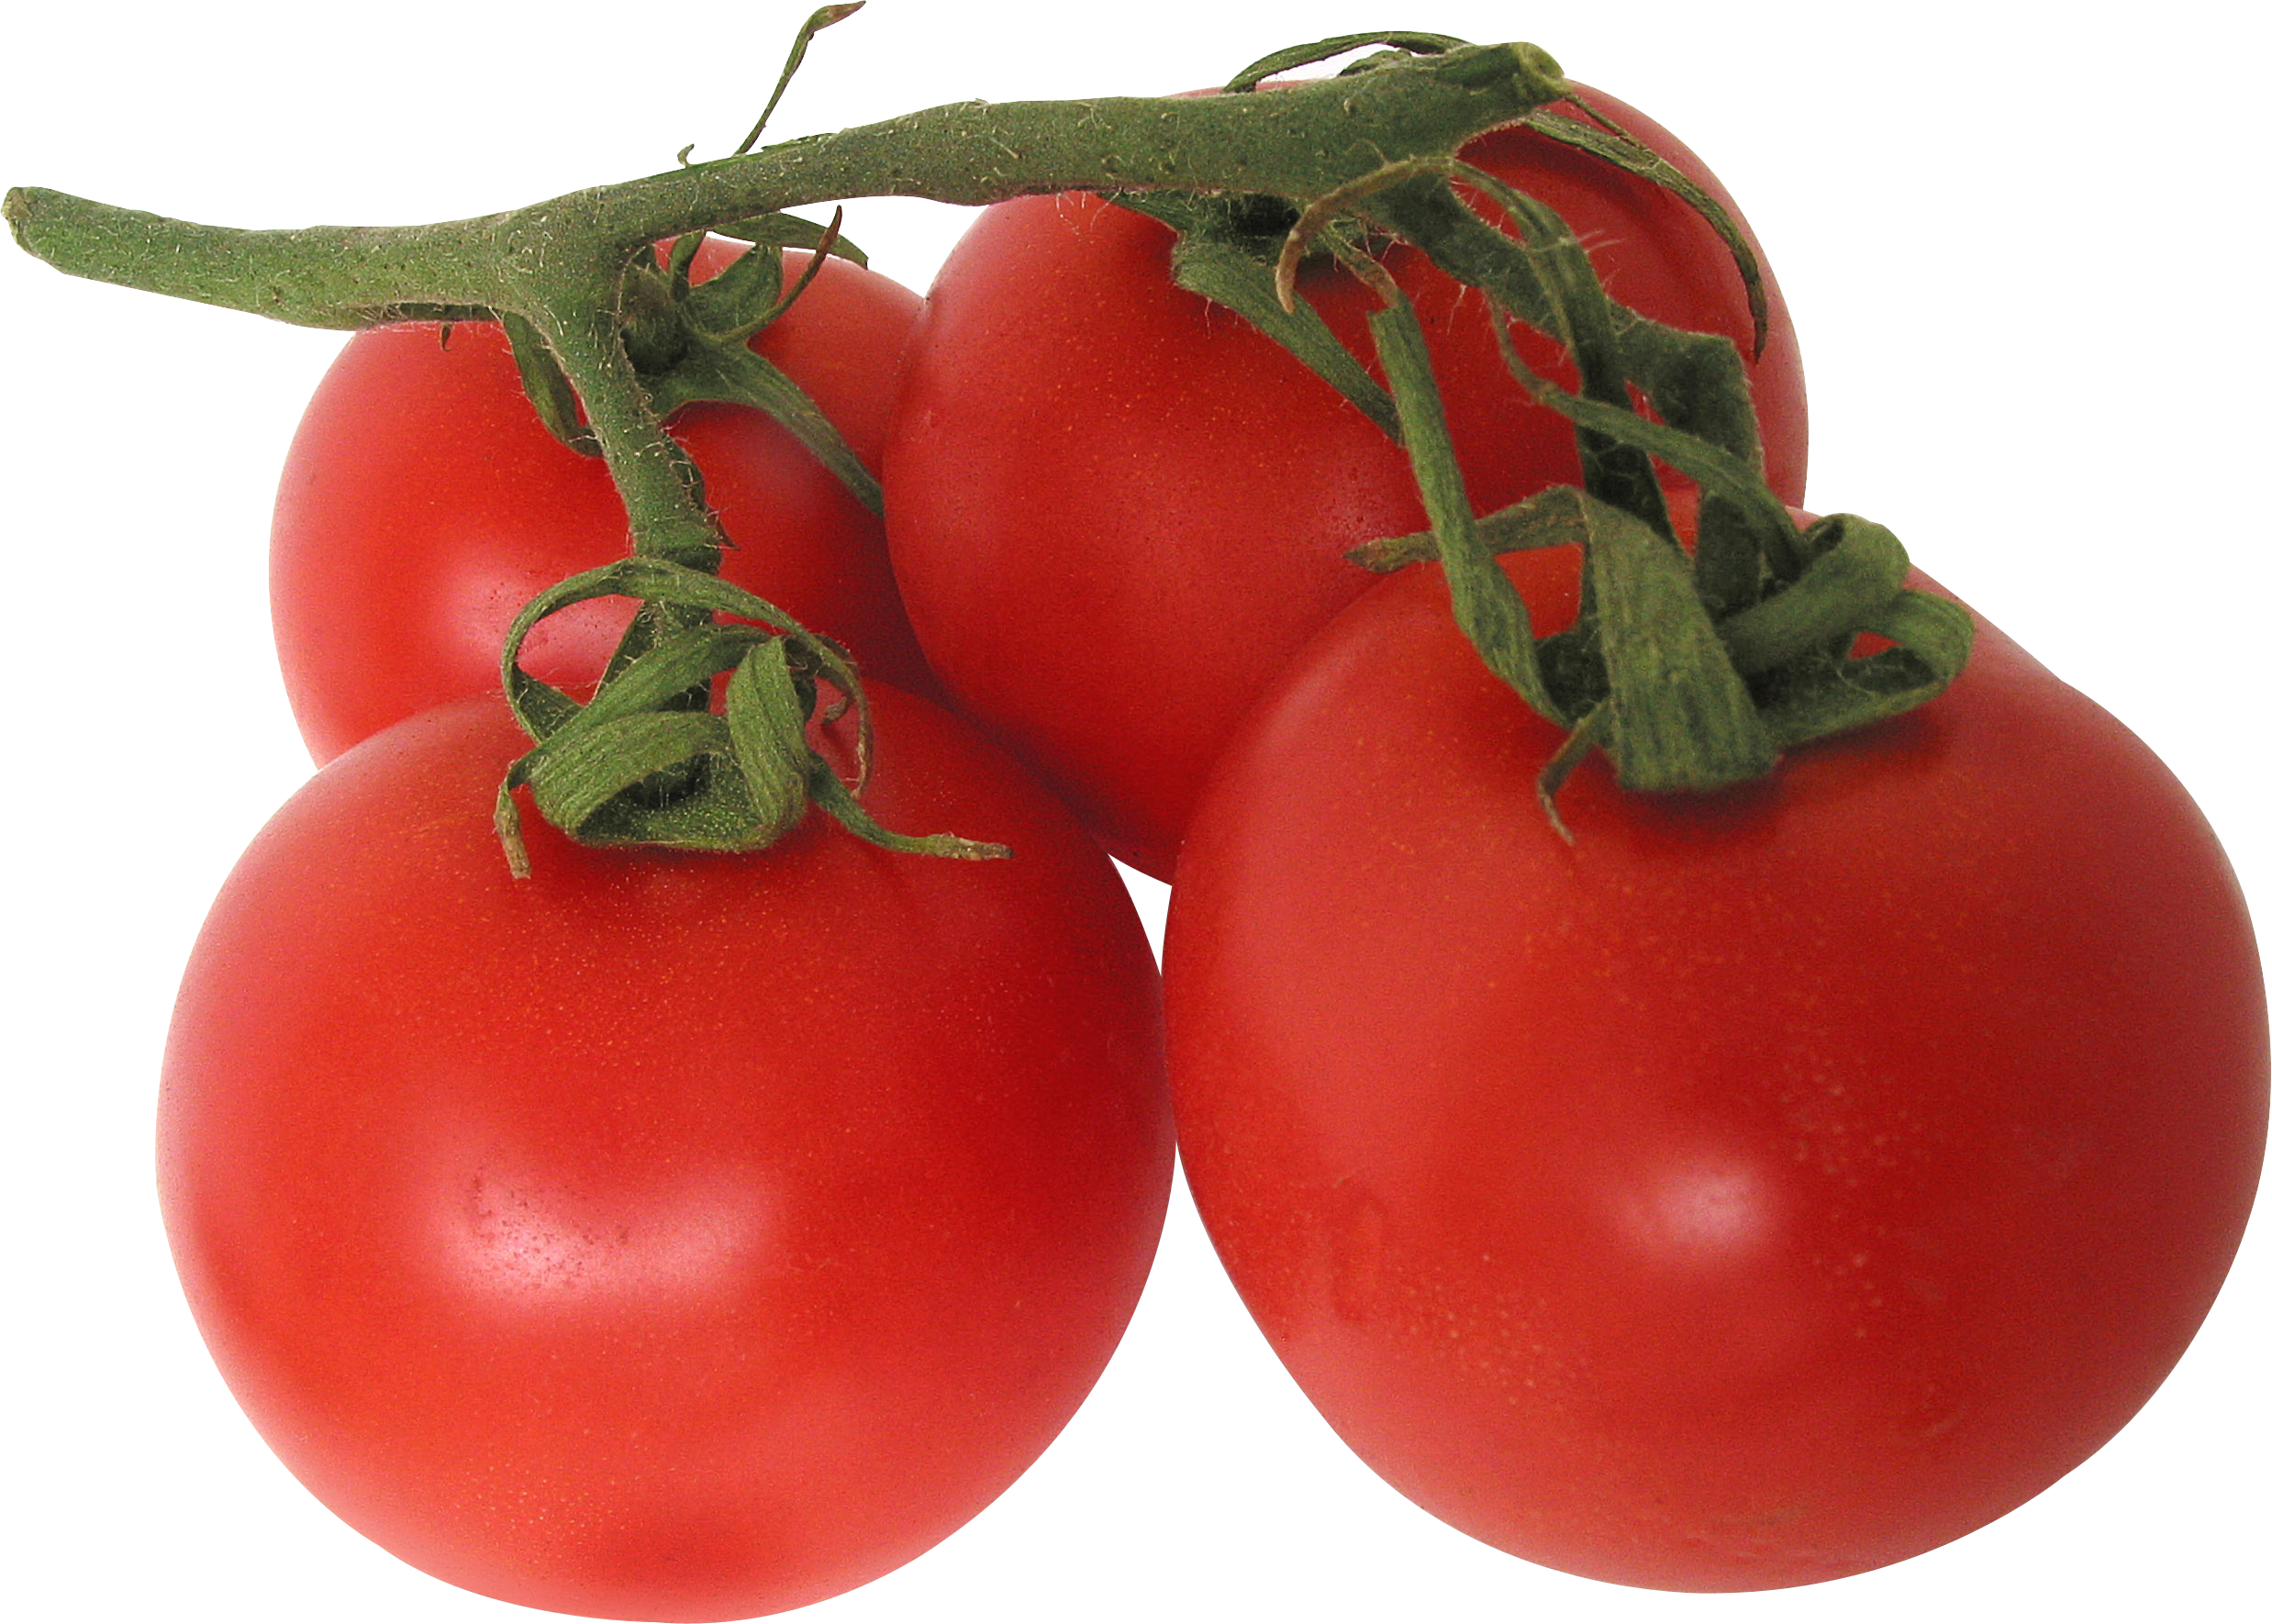 tomatoes clipart small tomato